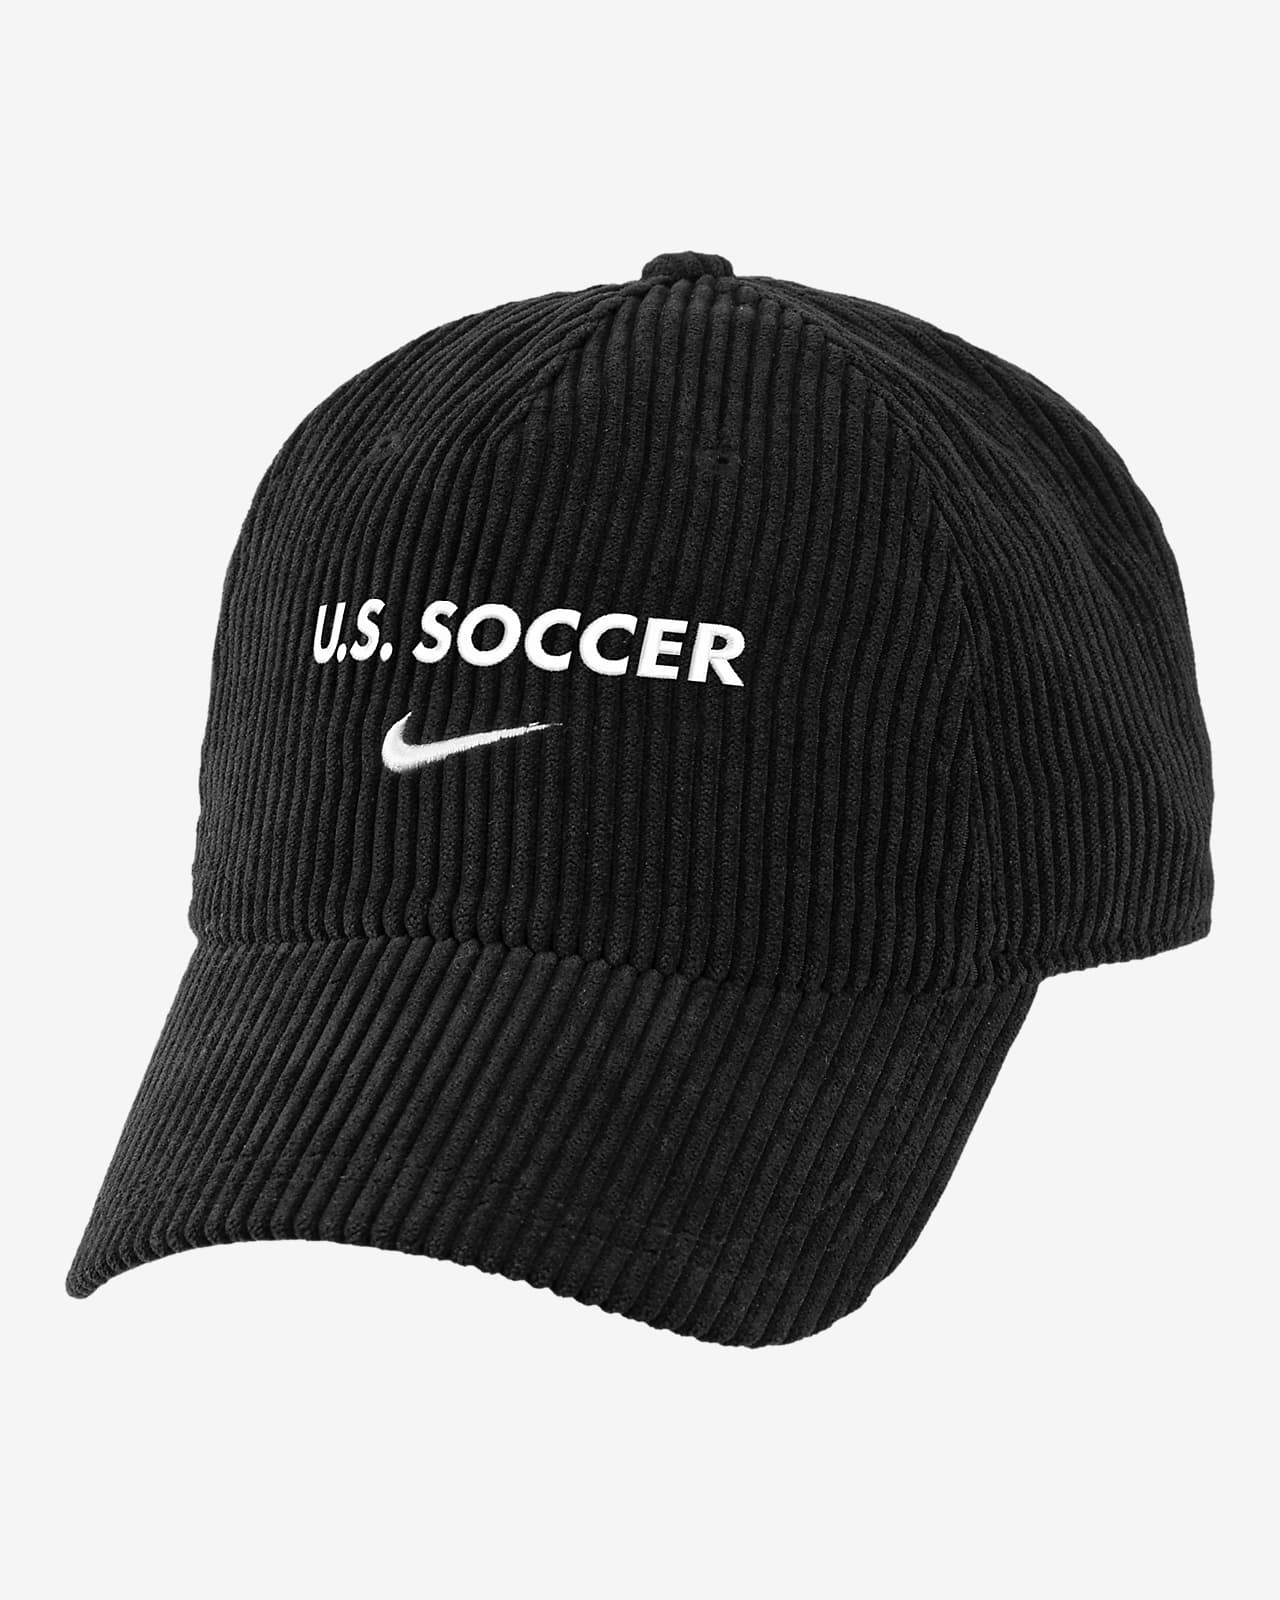 USMNT Nike Soccer Corduroy Cap